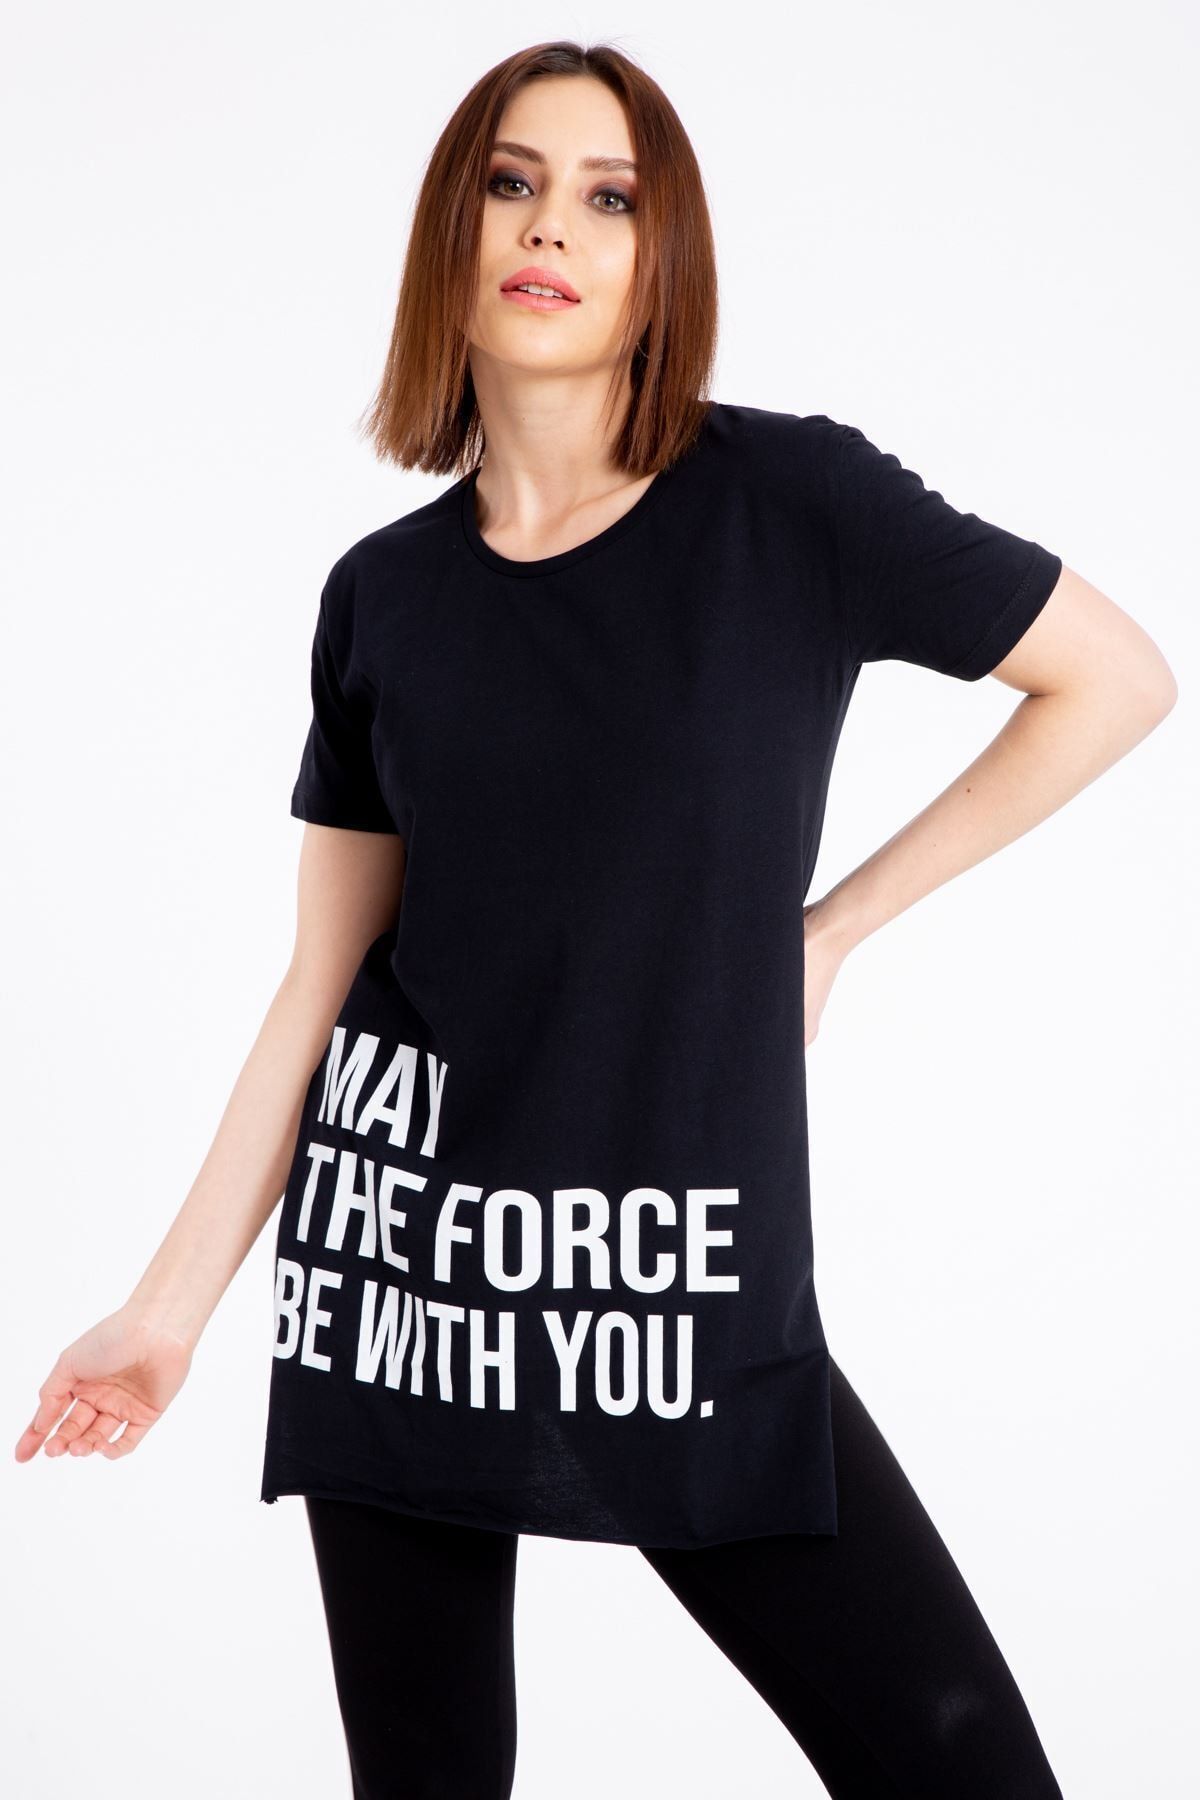 GİYSA May The Force Baskılı Siyah T-Shirt Giysa 1074